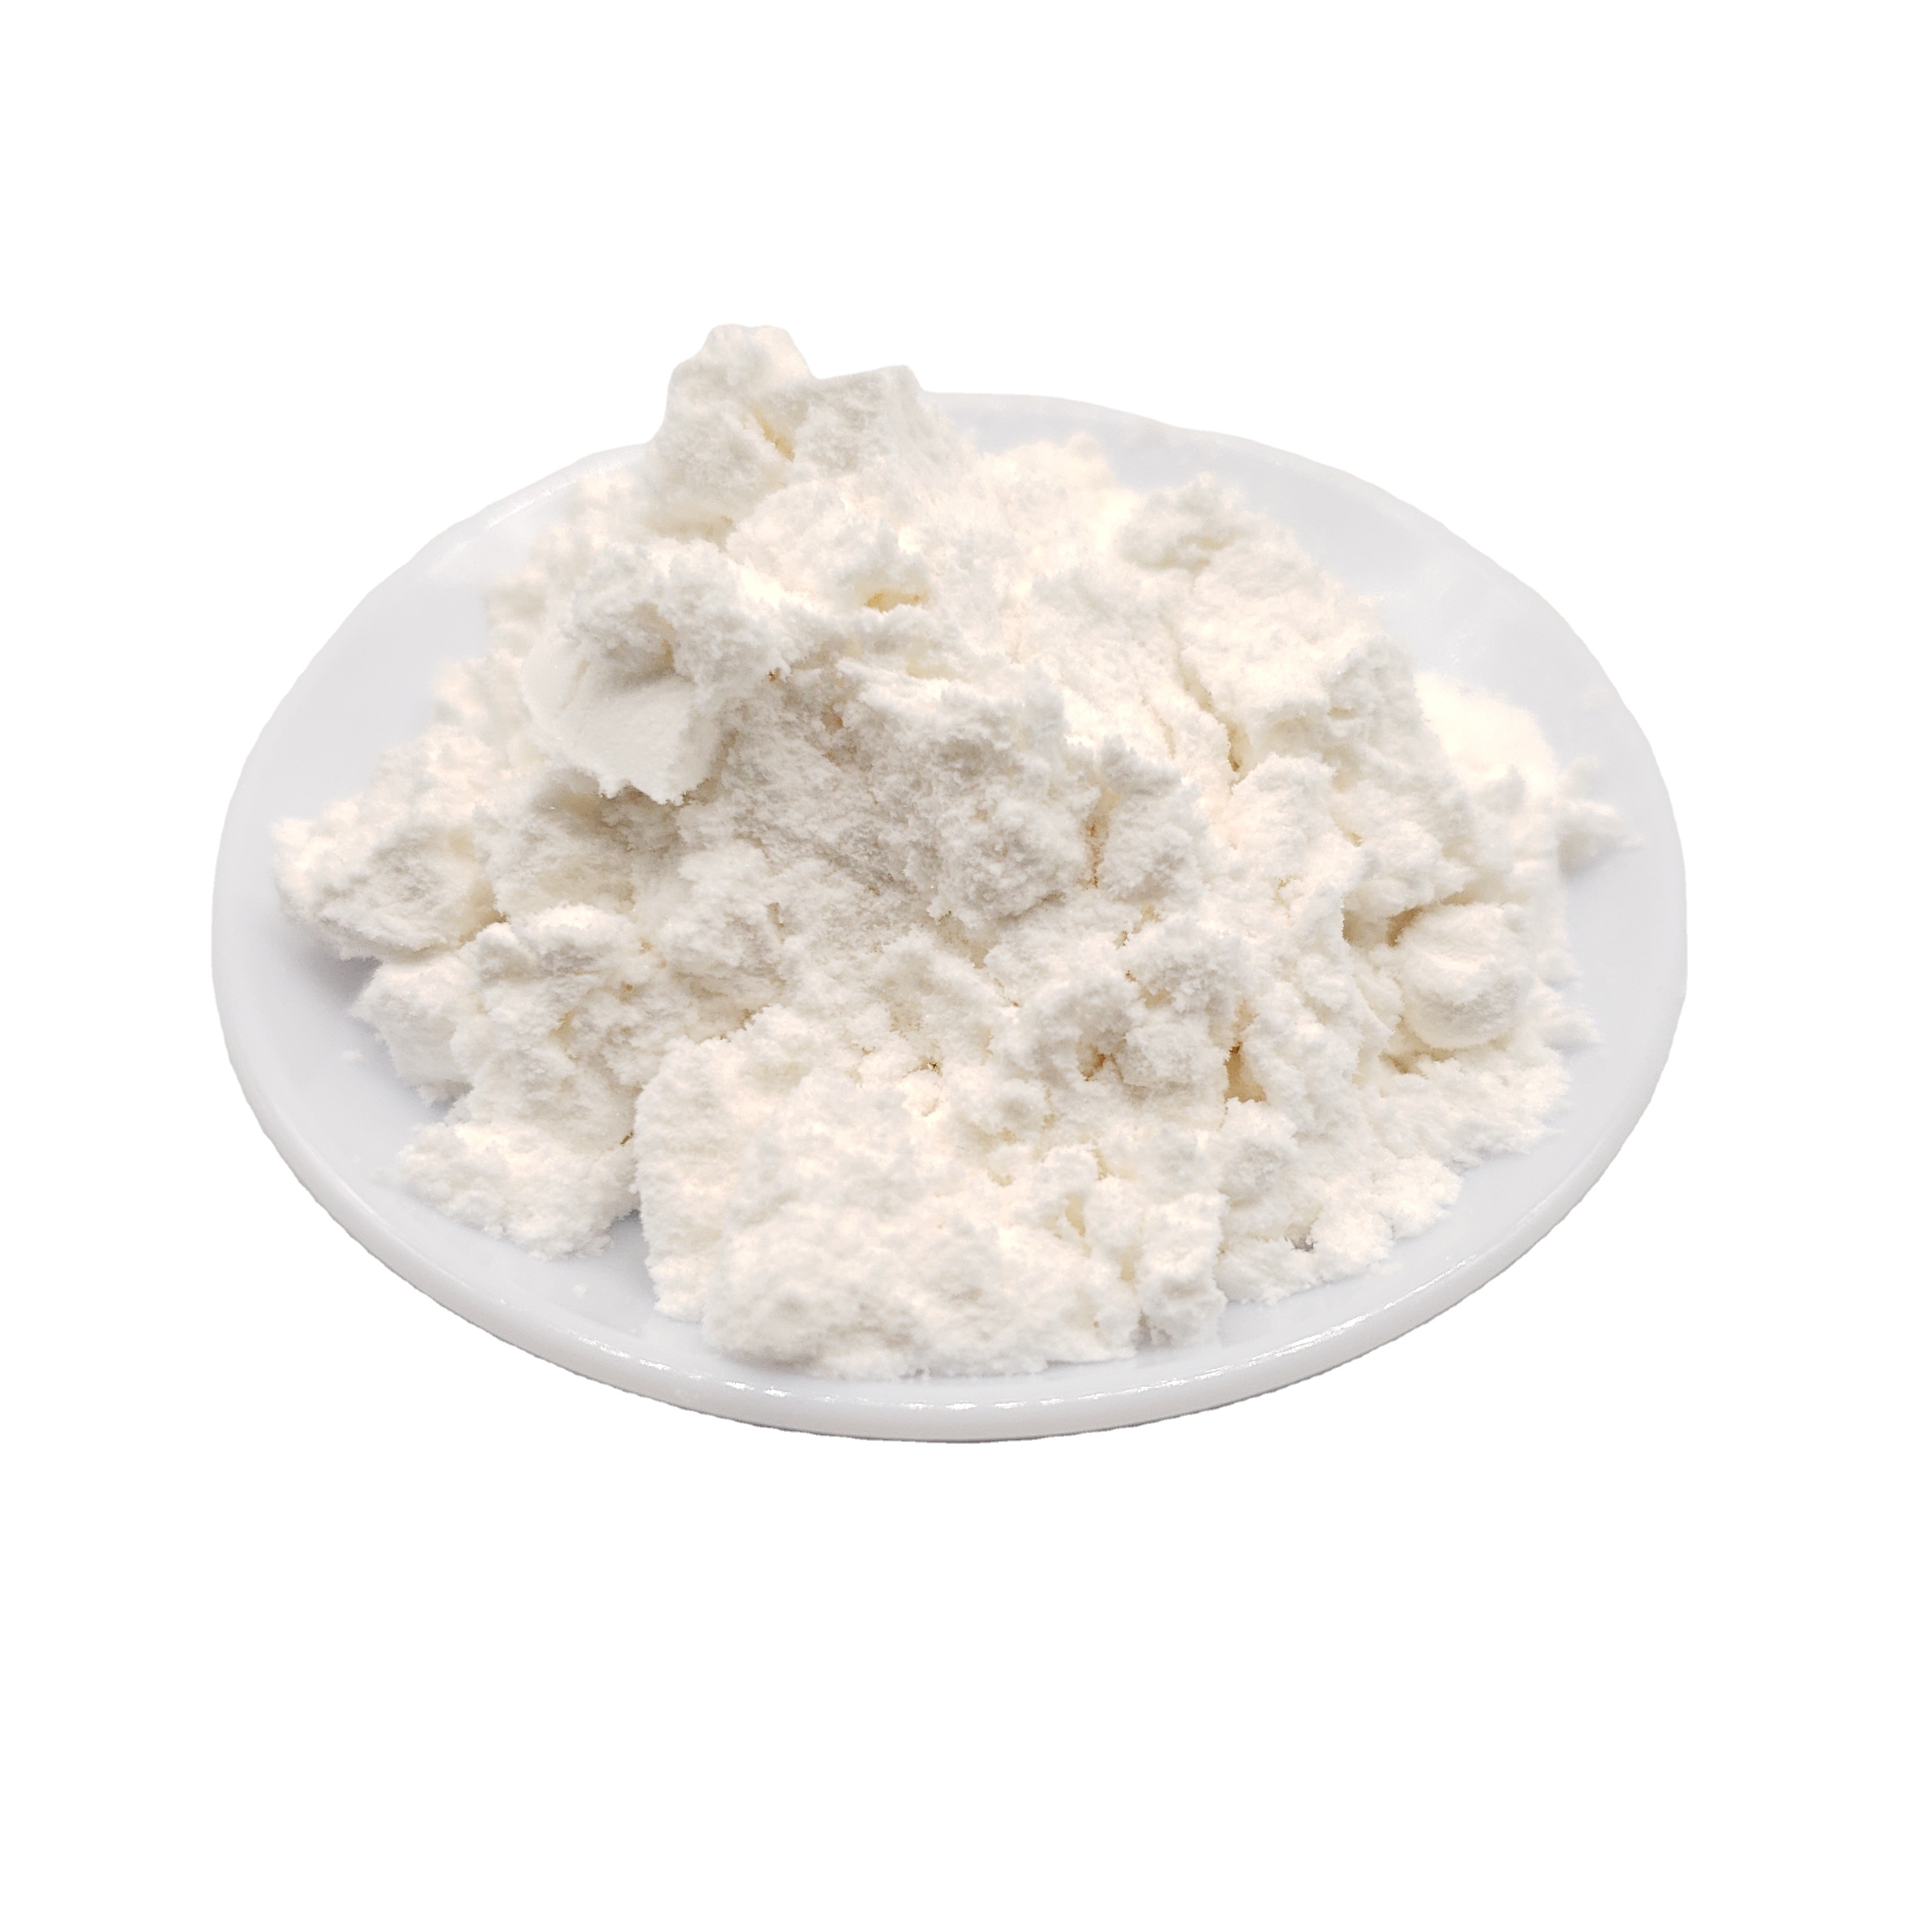 1.3-Dimethylamylamine HCl Dmaa Powder CAS 13803-74-2 